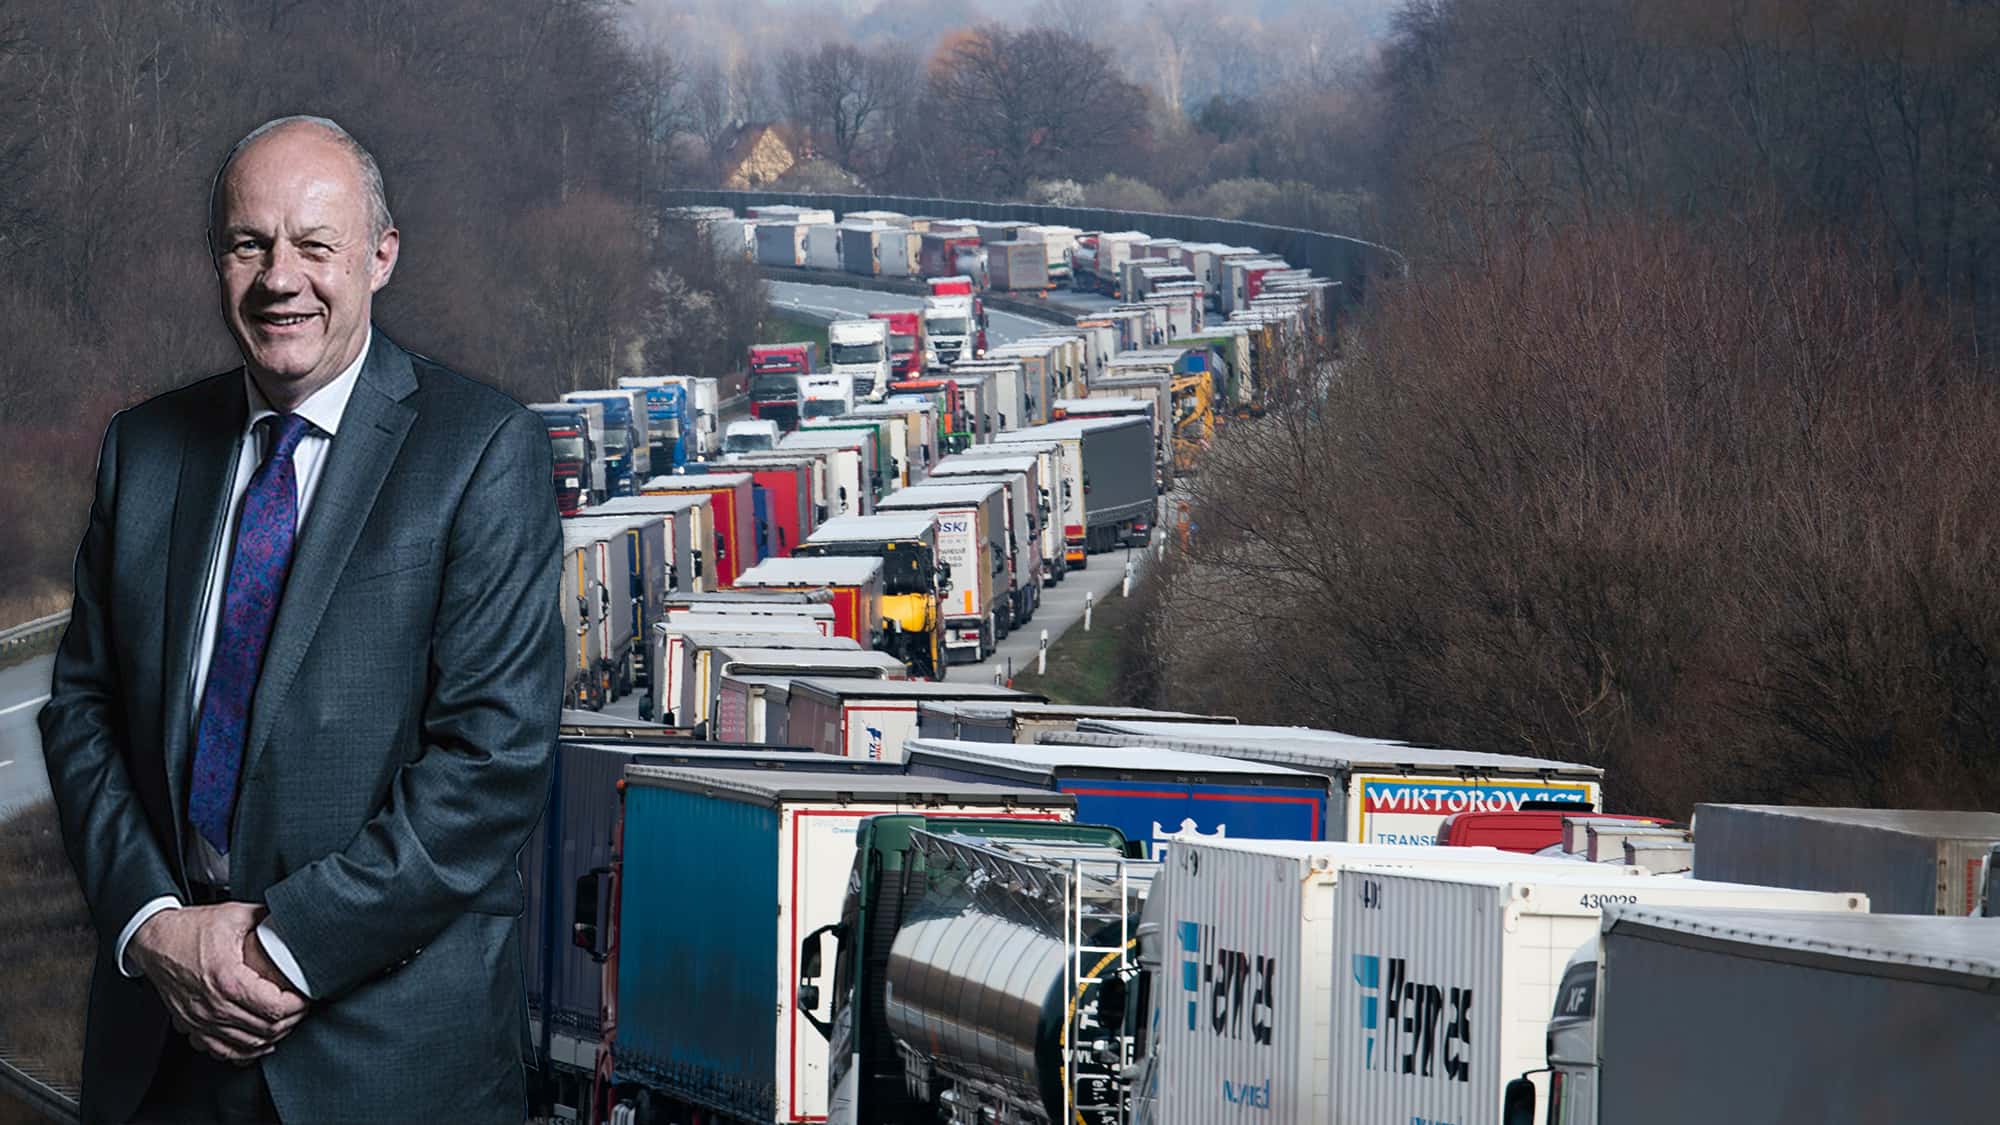 Damian Green laments truck pile up in Ashford – Twitter reacts